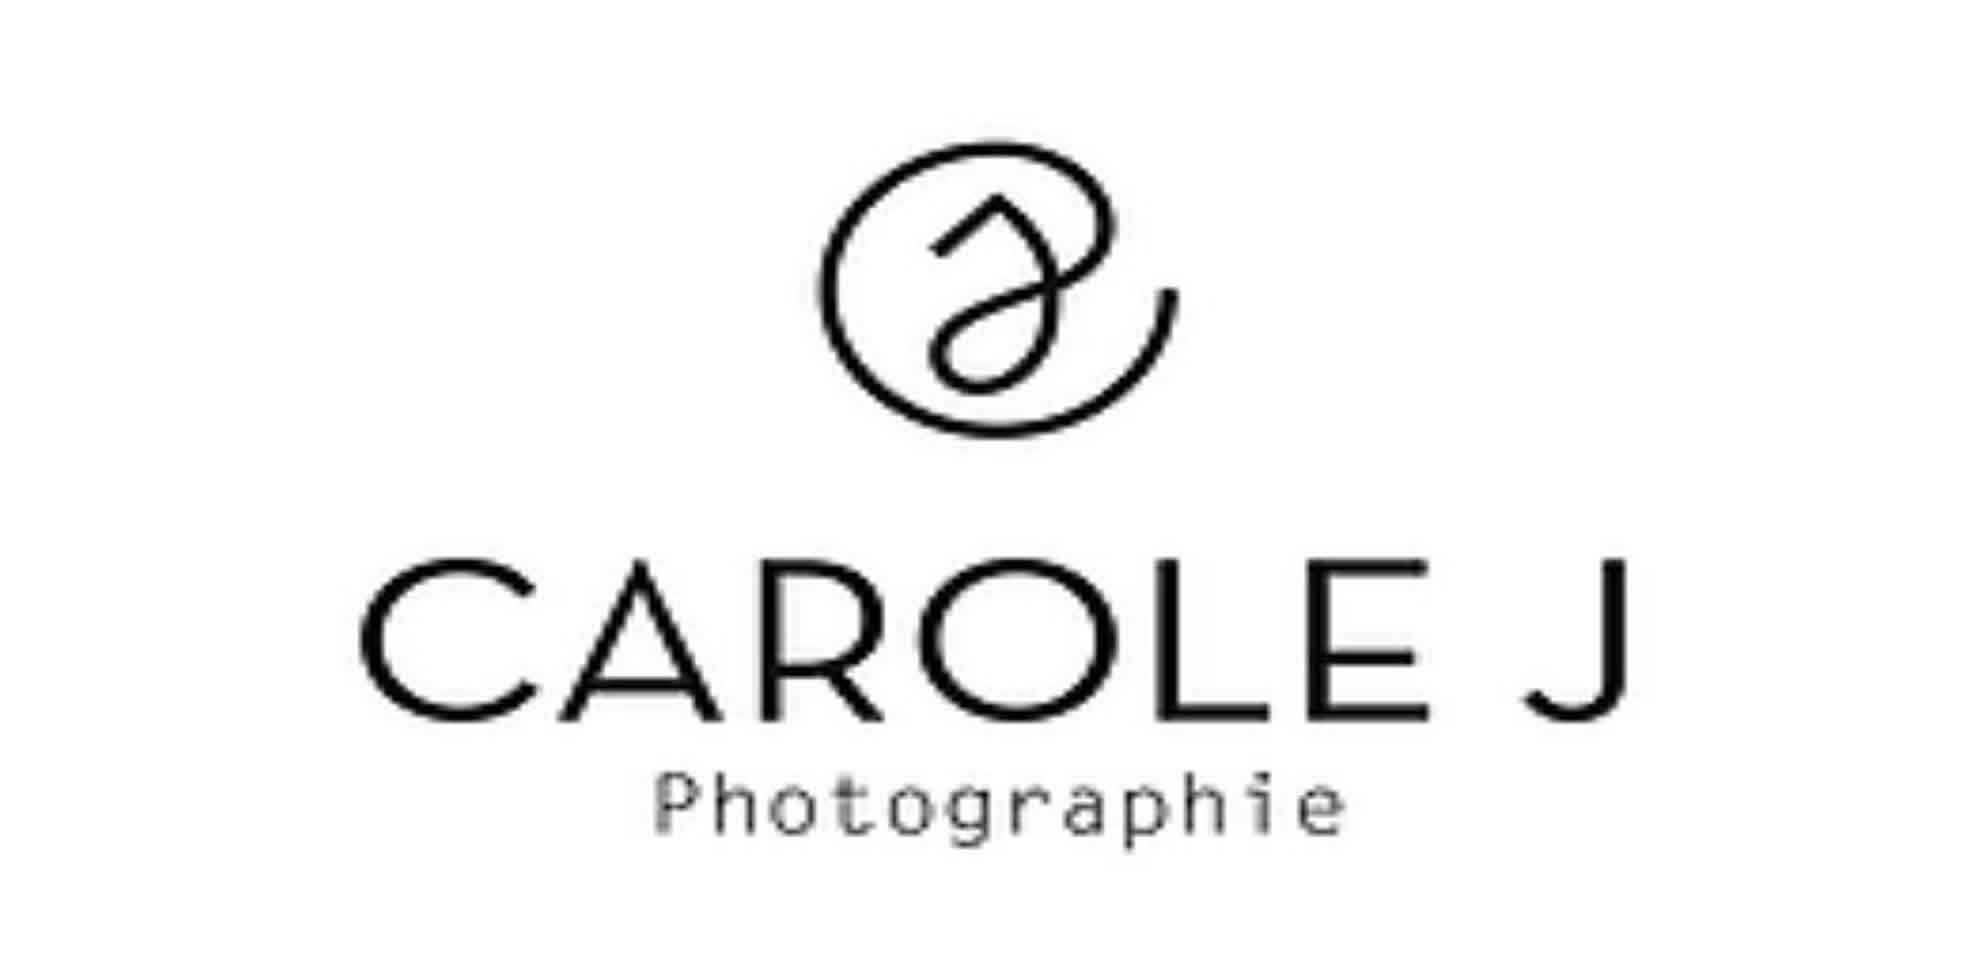 Carole J. Photographie